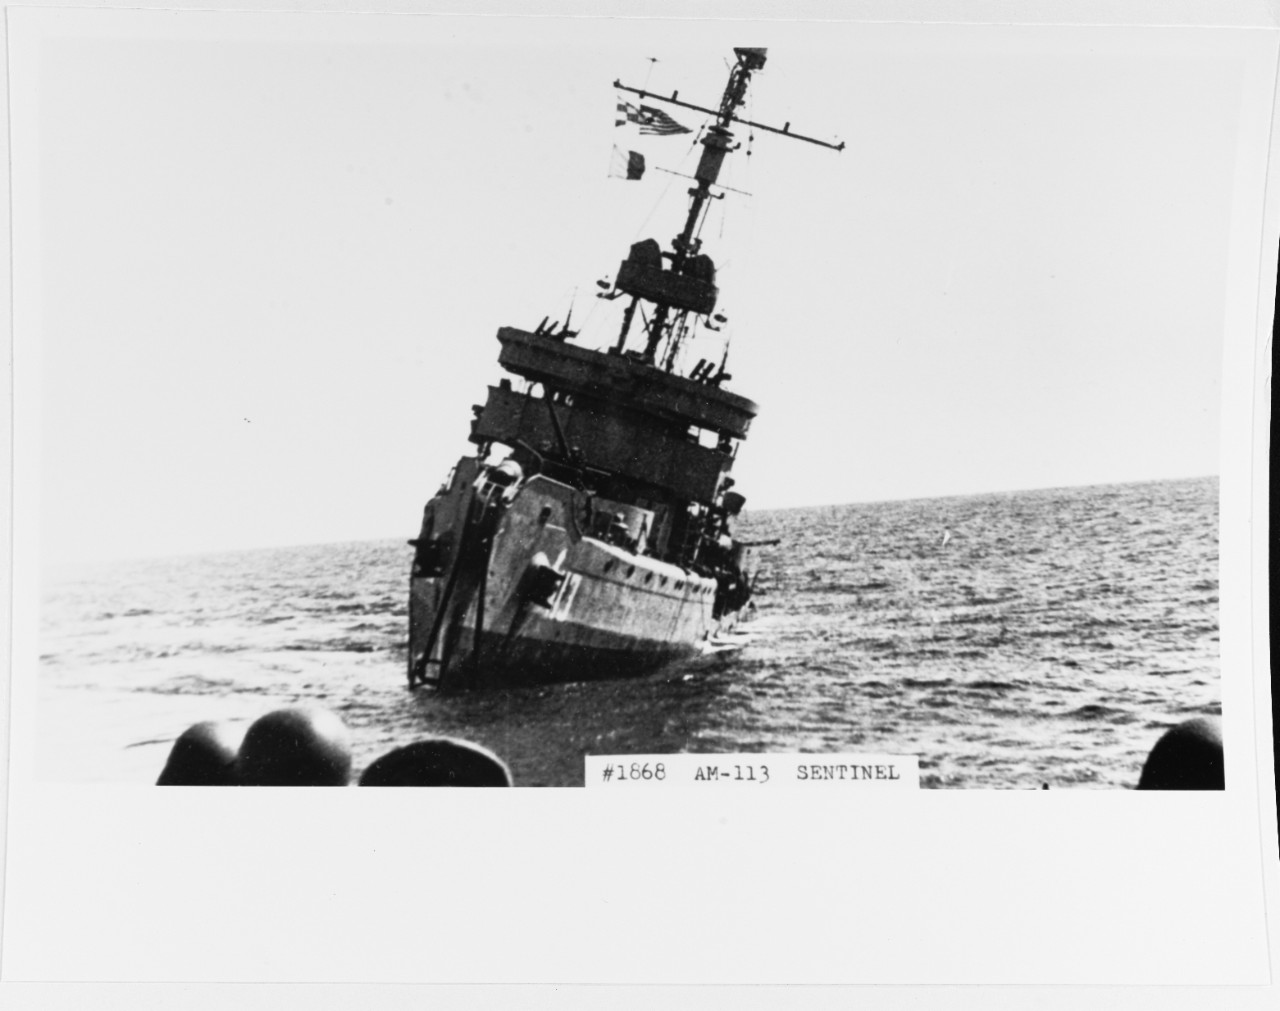 USS SENTINEL (AM-113)